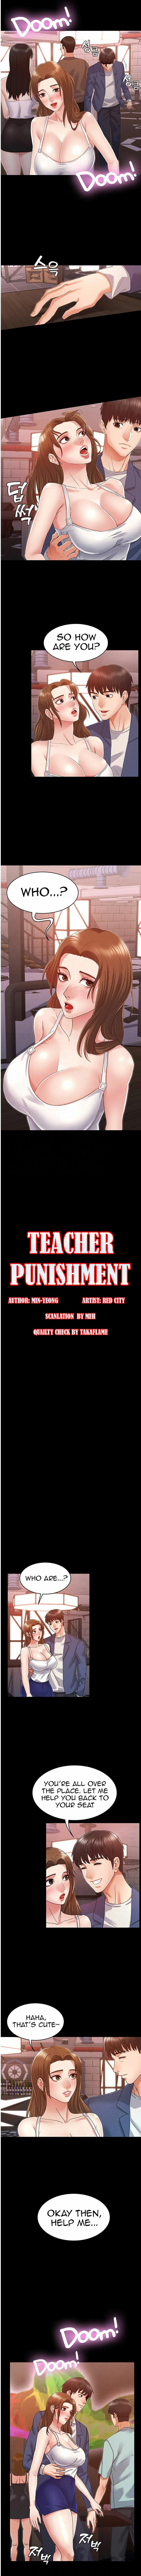 TEACHER PUNISHMENT Ch.1-14 11